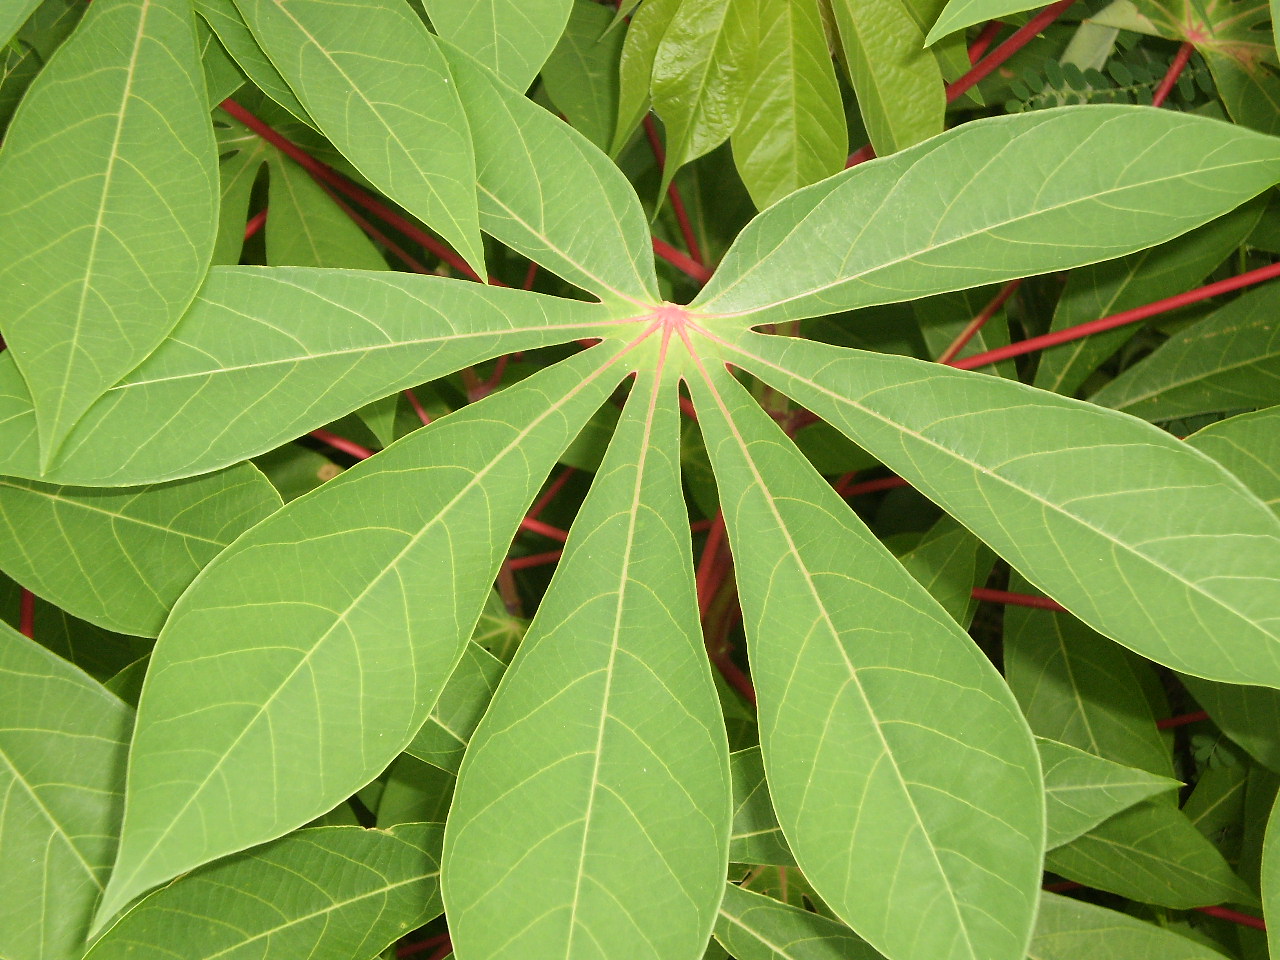 sept07024.jpg - cassava (Manihot esculenta) leaves